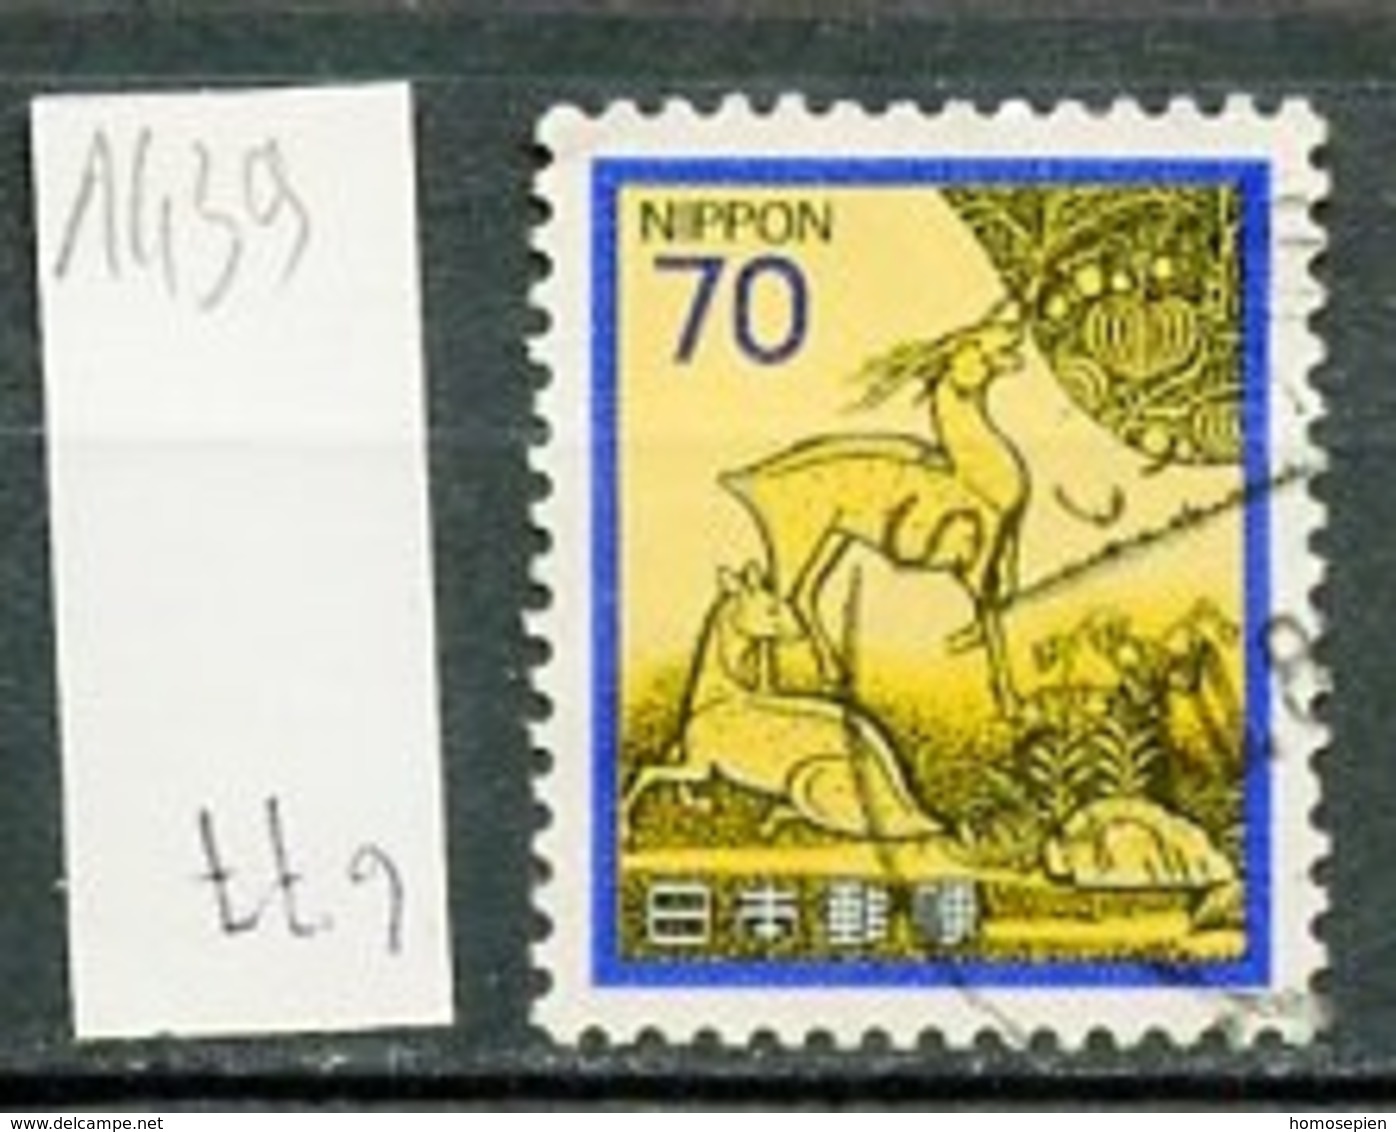 Japon - Japan 1982 Y&T N°1439 - Michel N°1538 (o) - 70y Cervidés - Used Stamps